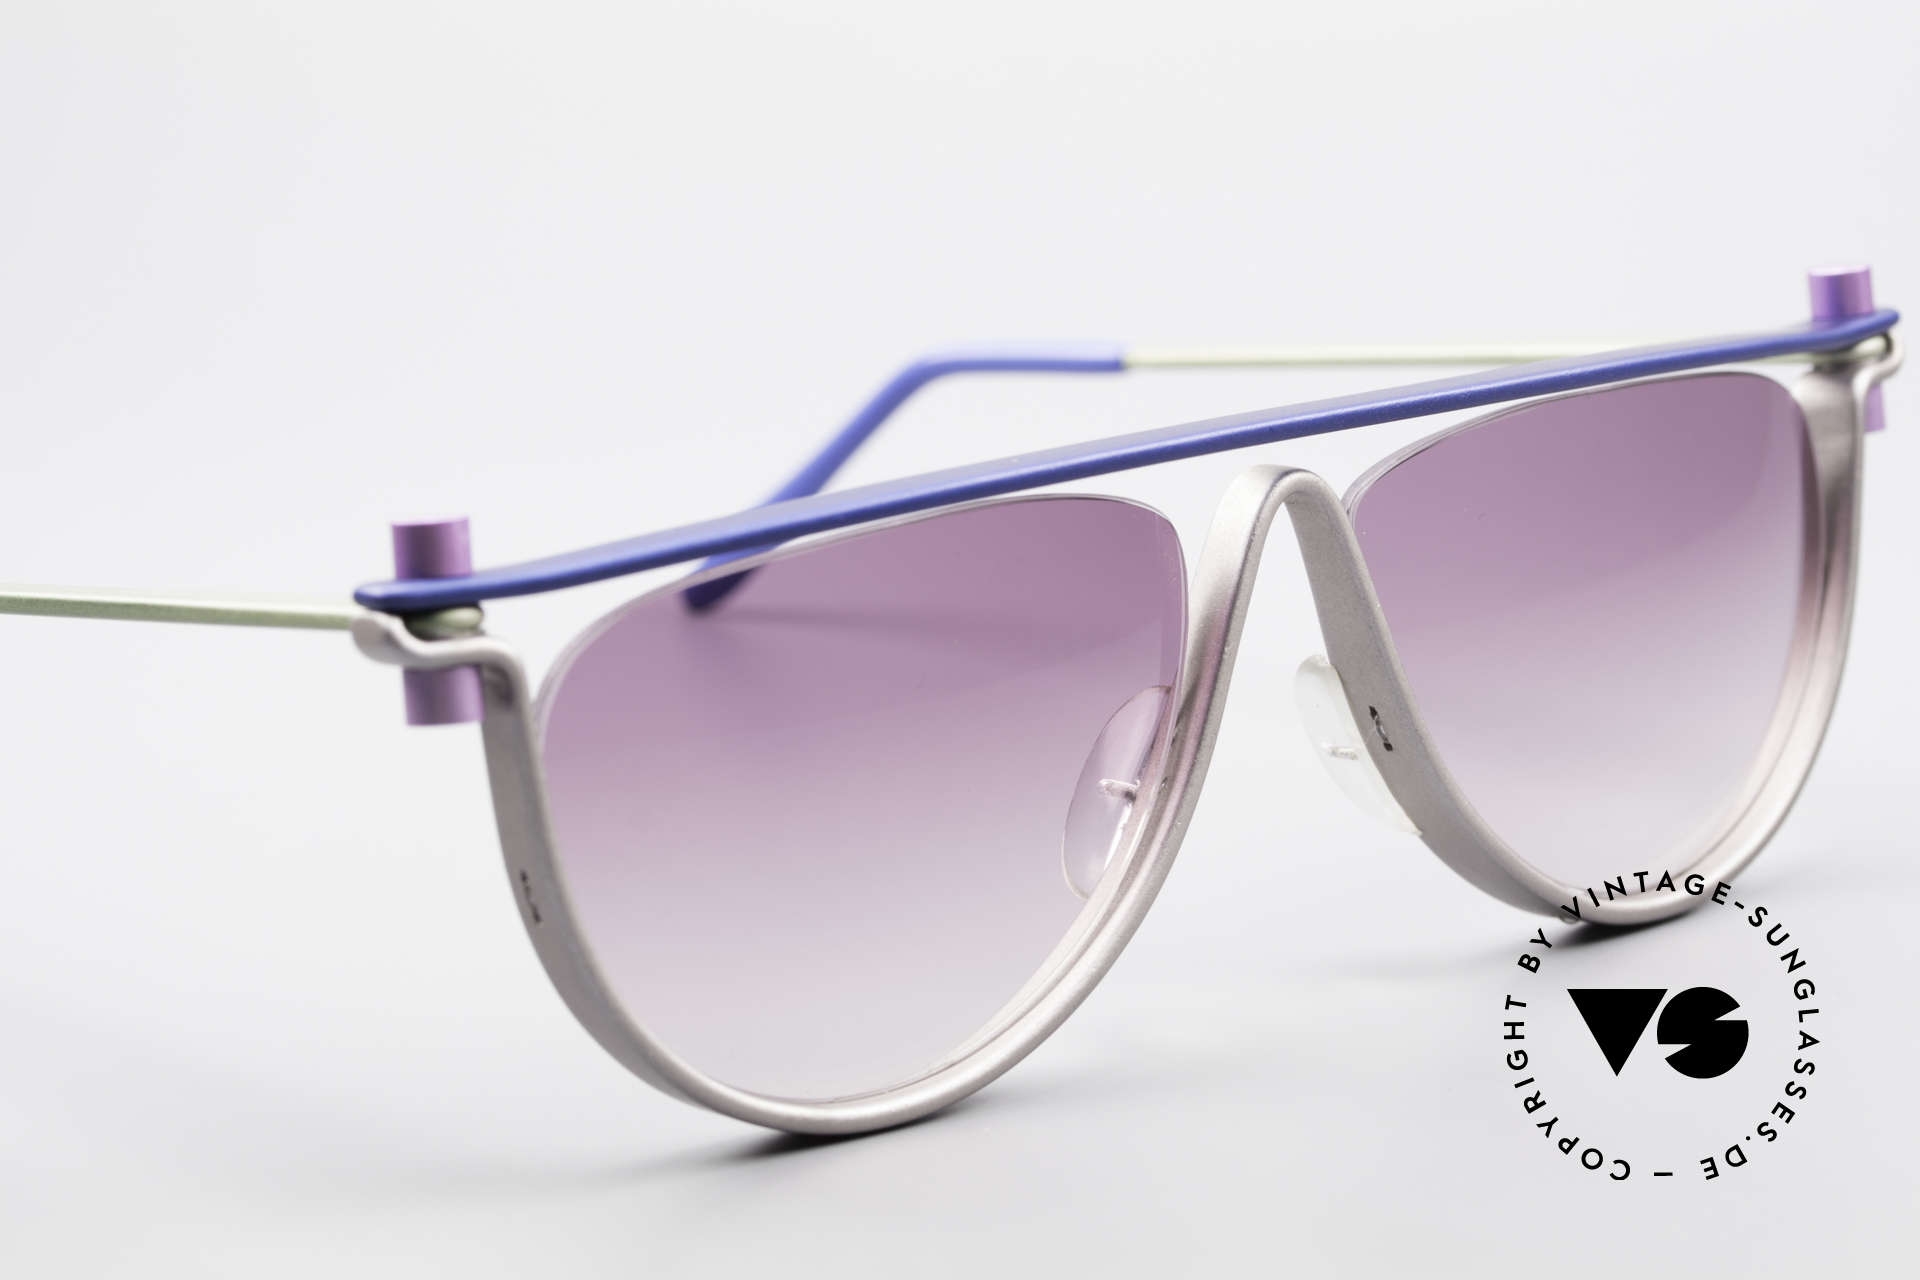 ProDesign No5 With Earring Barrette Bracelet, ultra RARE designer sunglasses from the mid 1990's, Made for Women